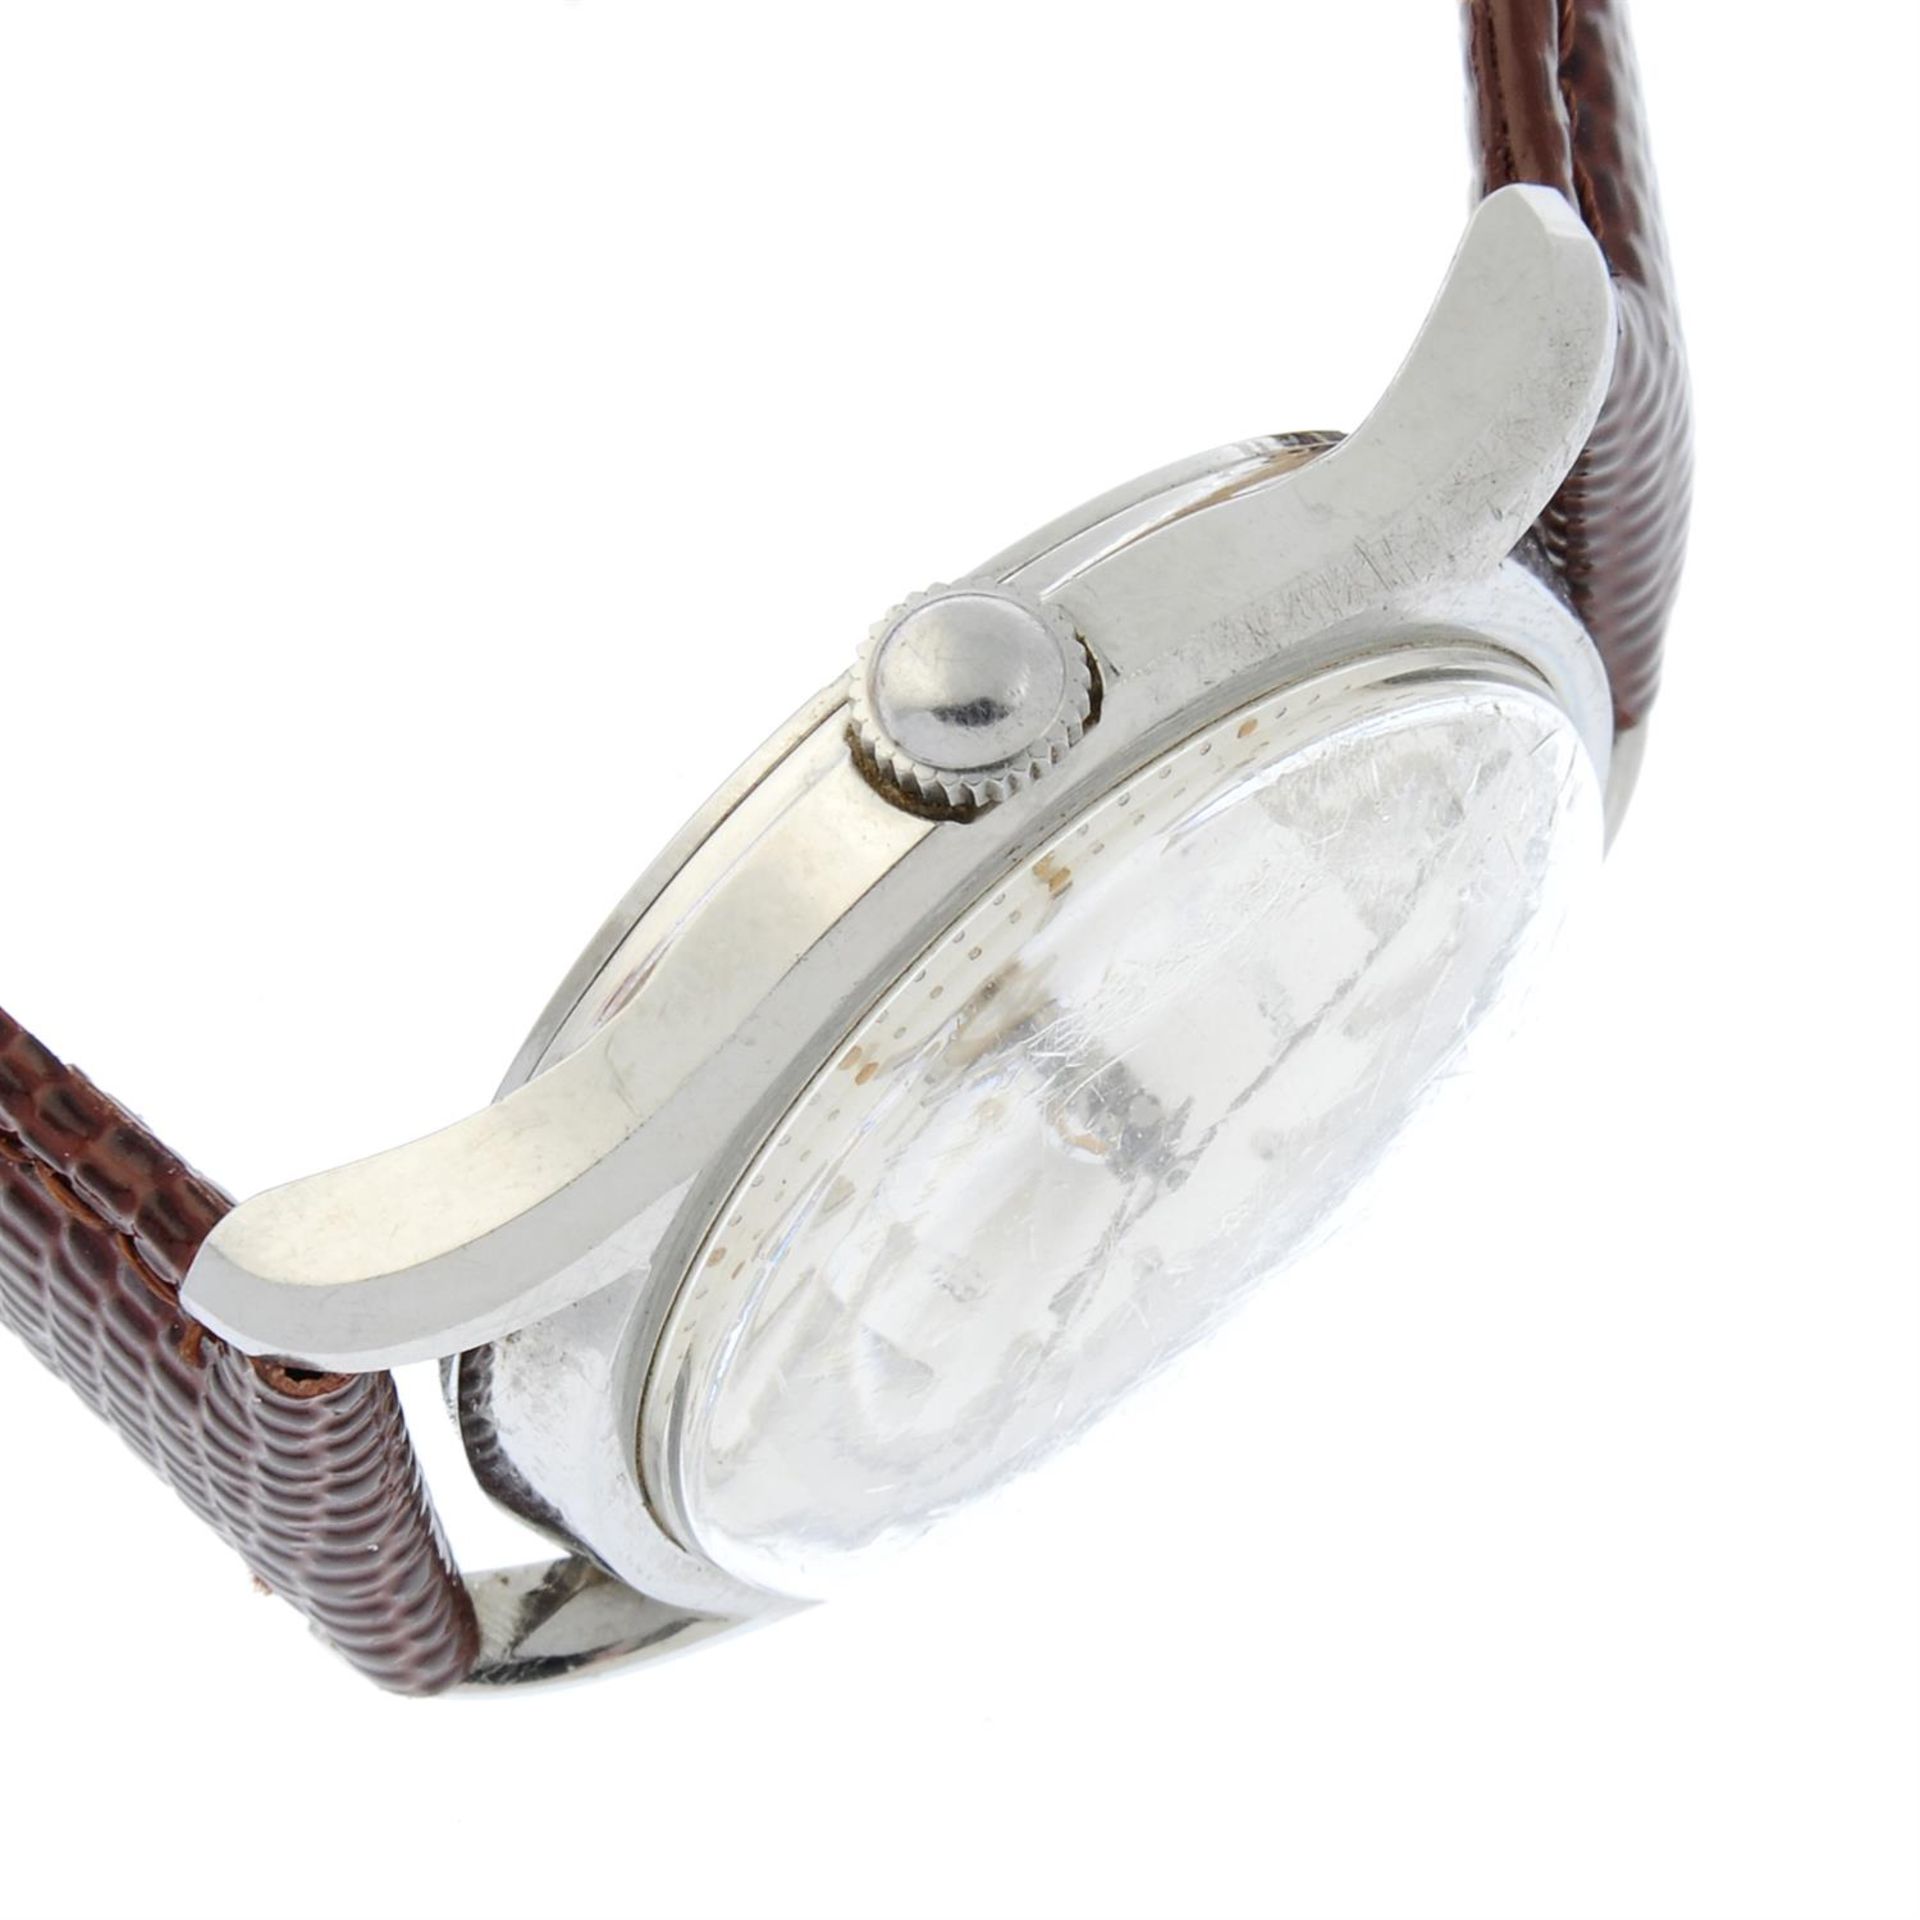 ETERNA - a stainless steel Kon Tiki wrist watch, 34mm. - Image 3 of 4